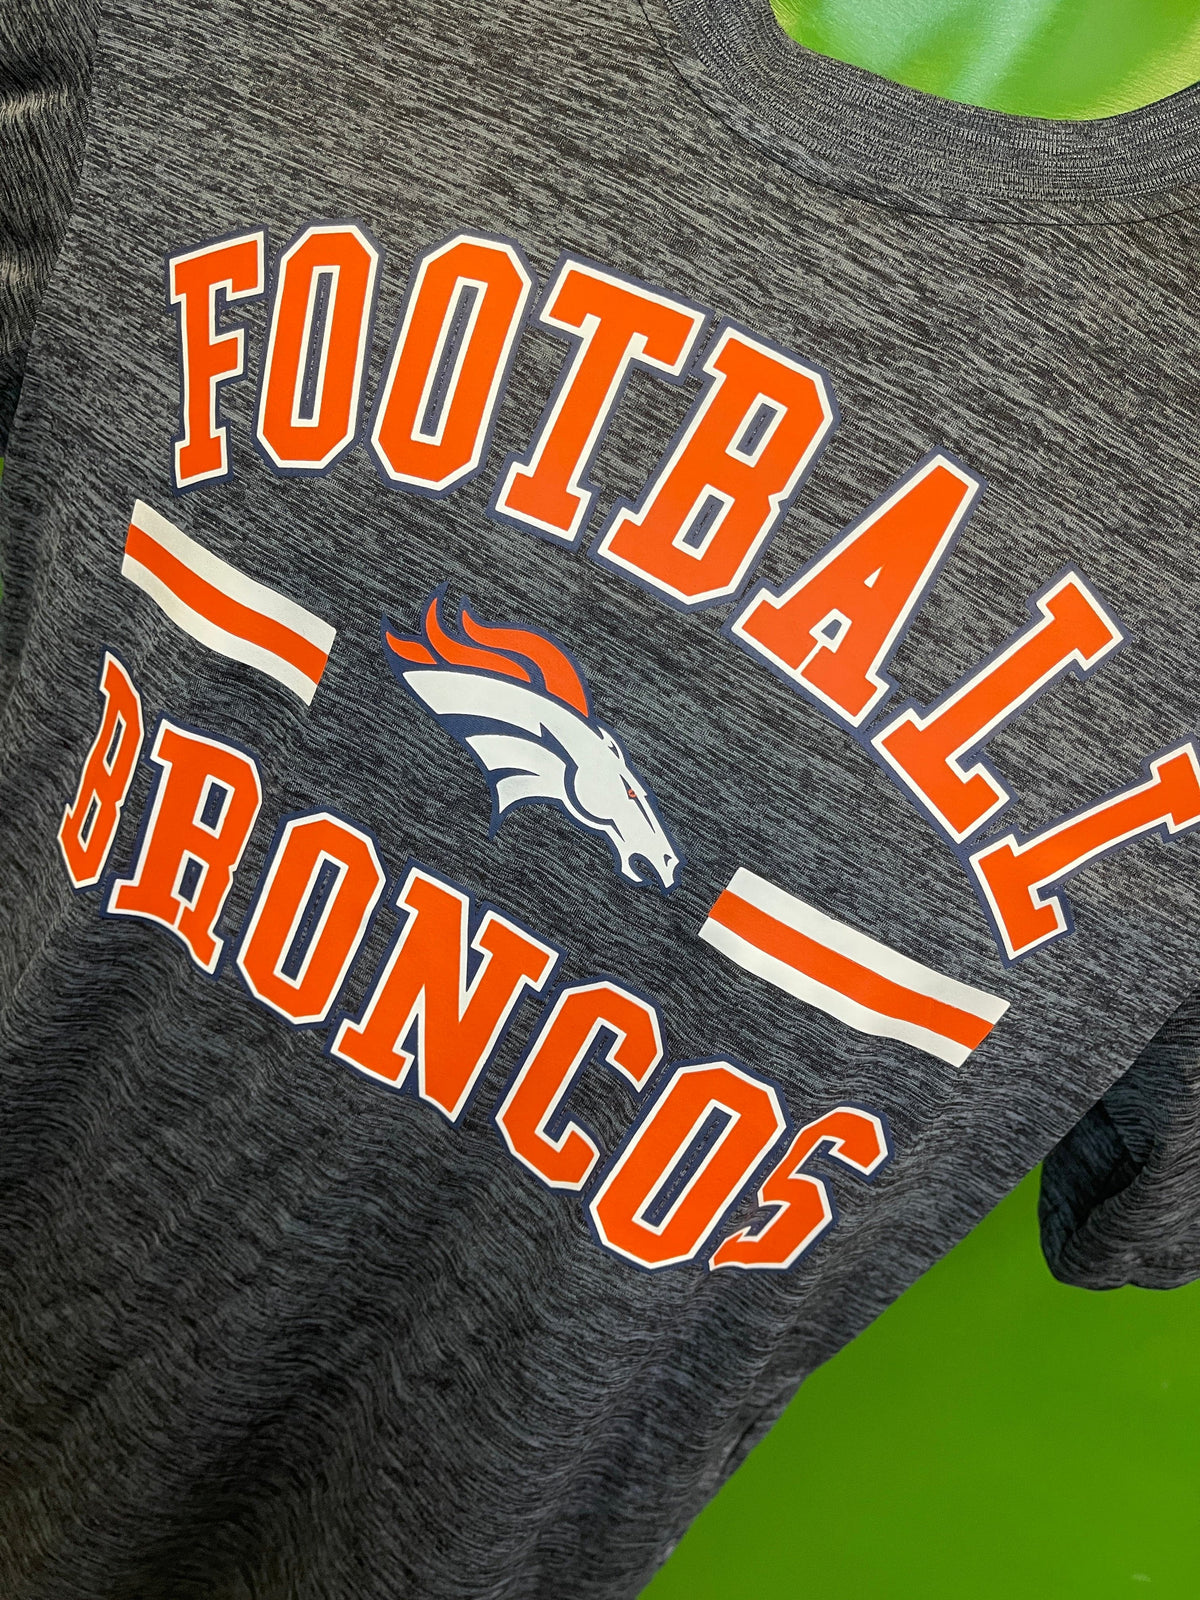 NFL Denver Broncos Heathered Grey Wicking-Style T-Shirt Youth X-Large 14-16